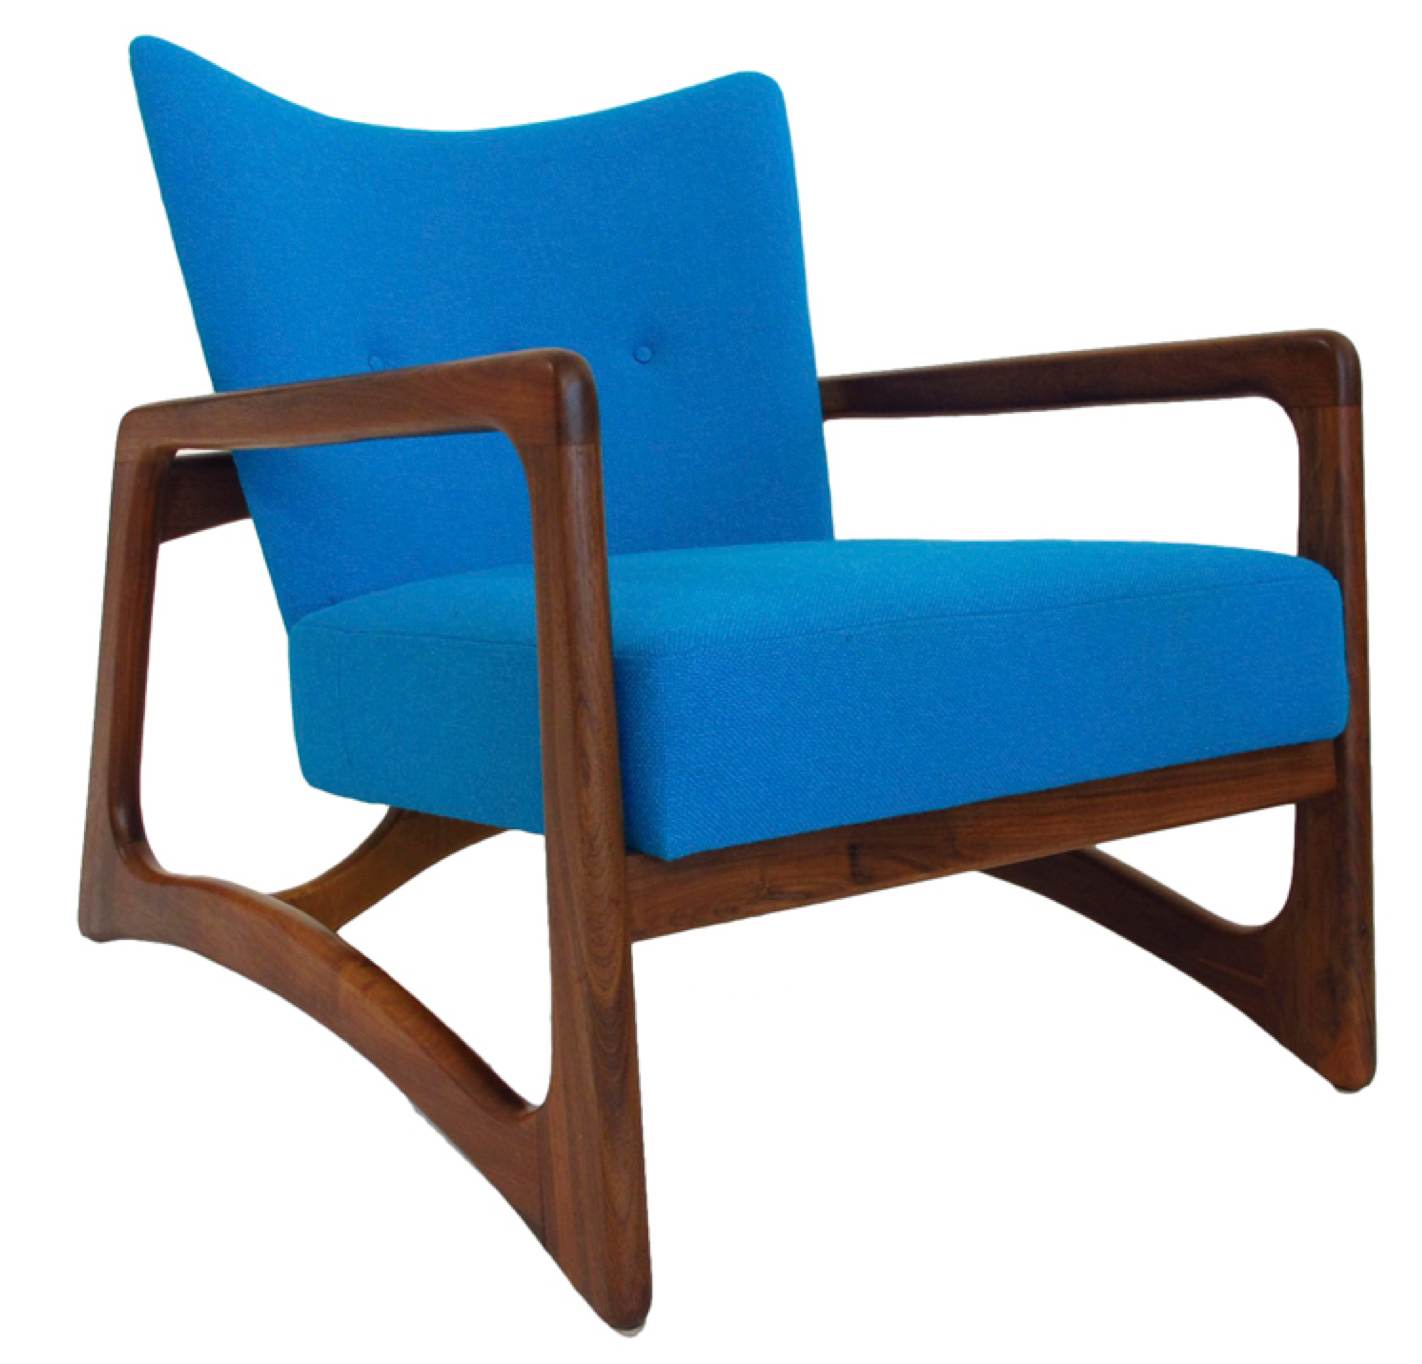 adrian pearsall chair